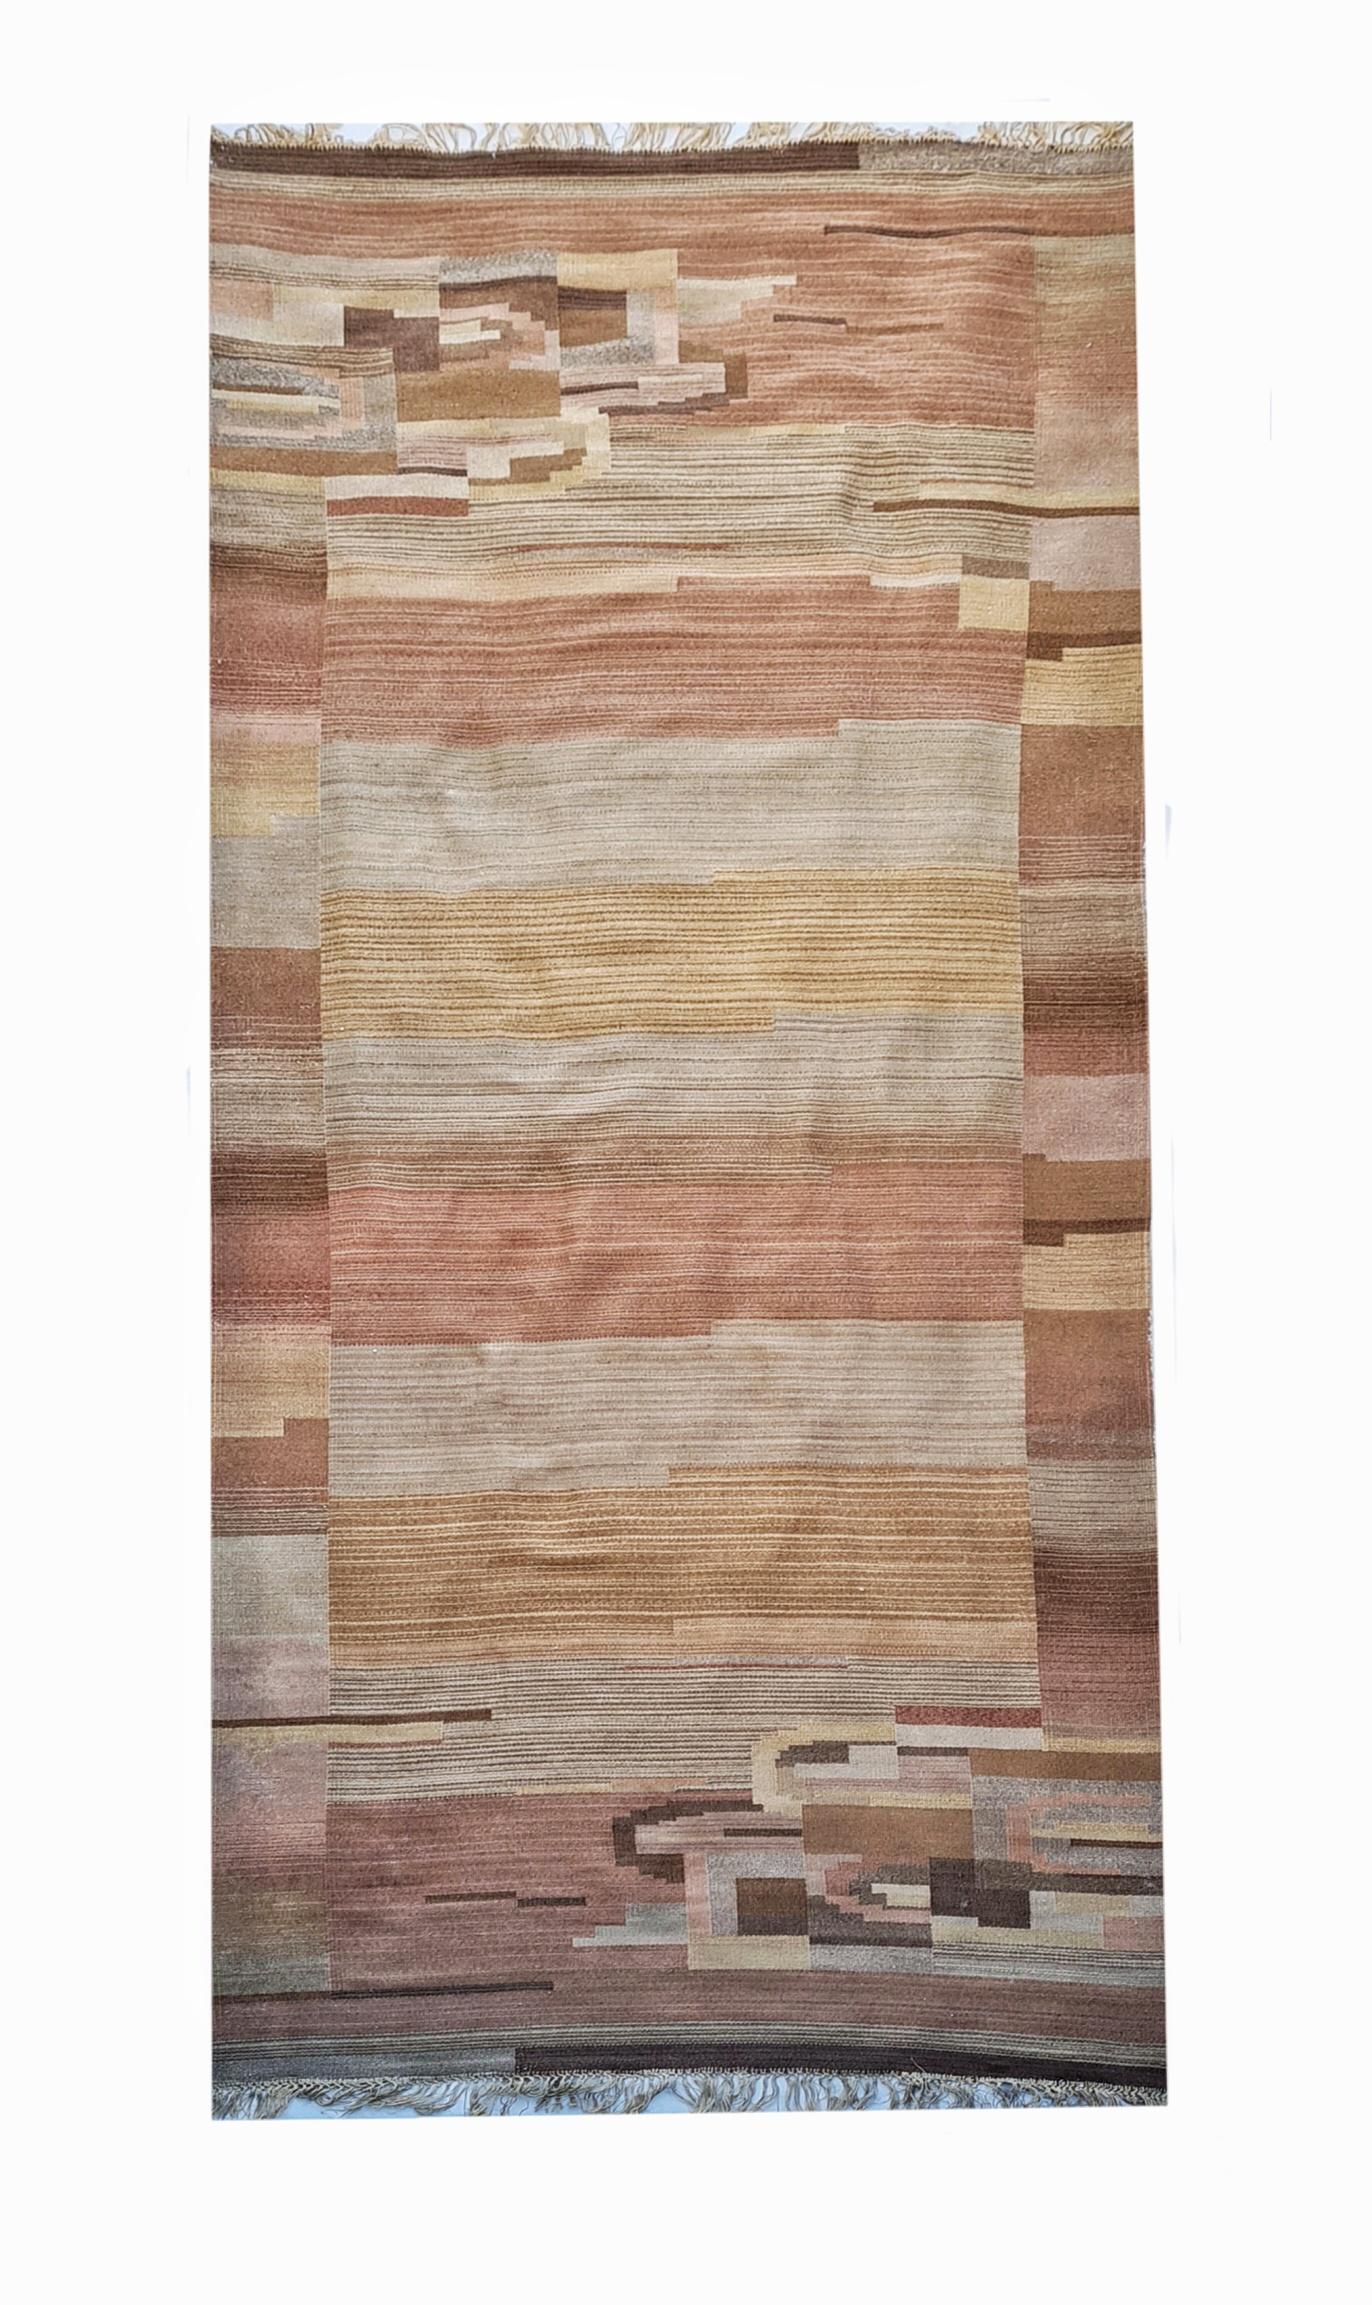 Wool Greta Skogster-Lehtinen, Finnish Flat-Weave Carpet For Sale